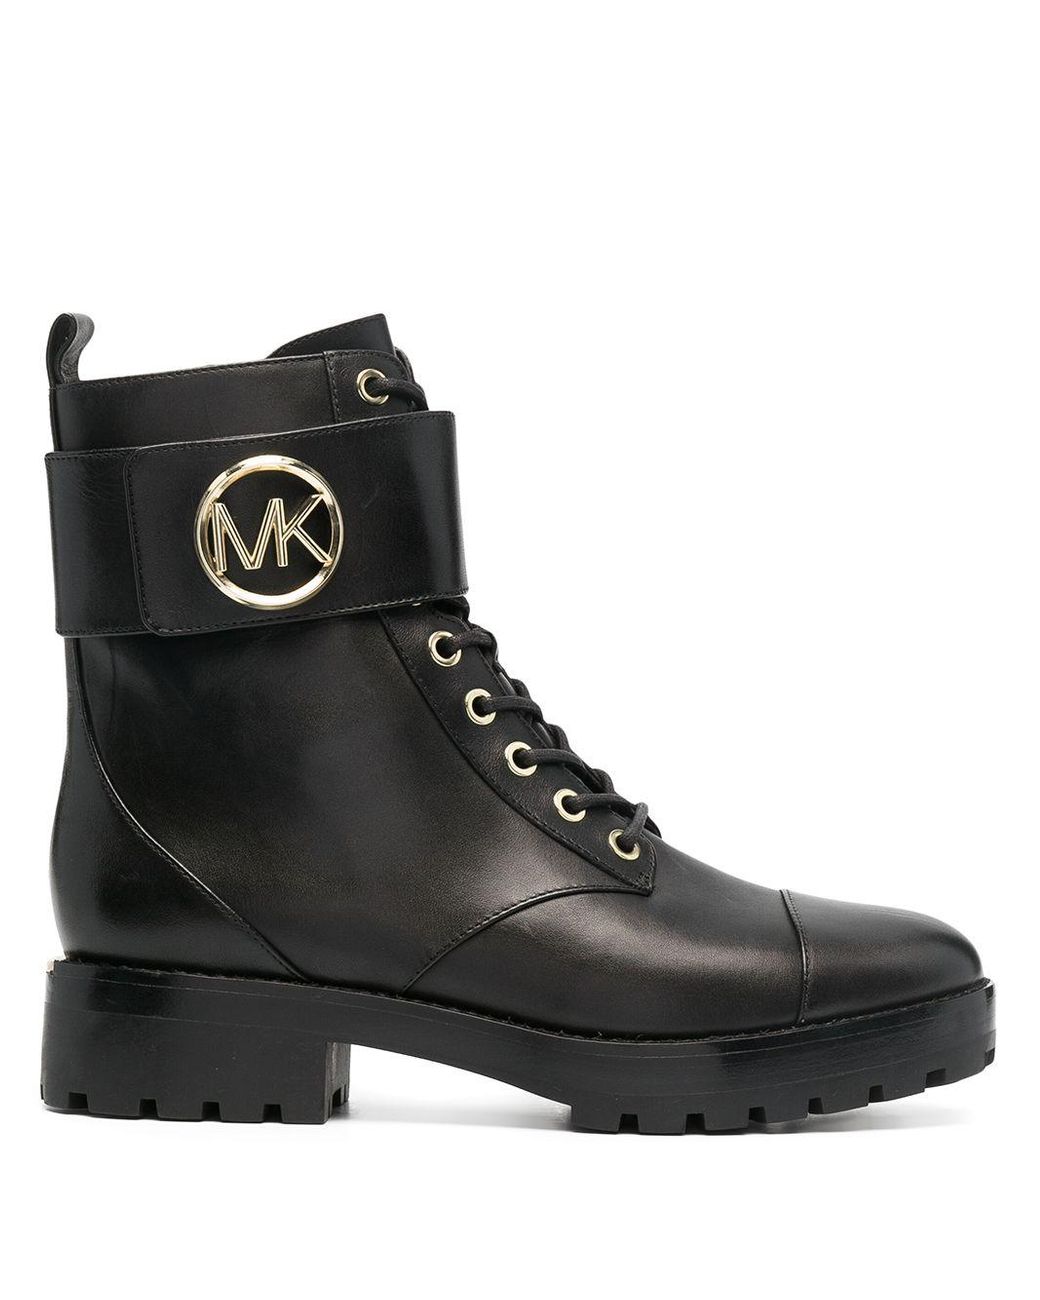 MICHAEL Michael Kors Tatum Leather Combat Boots in Black - Lyst